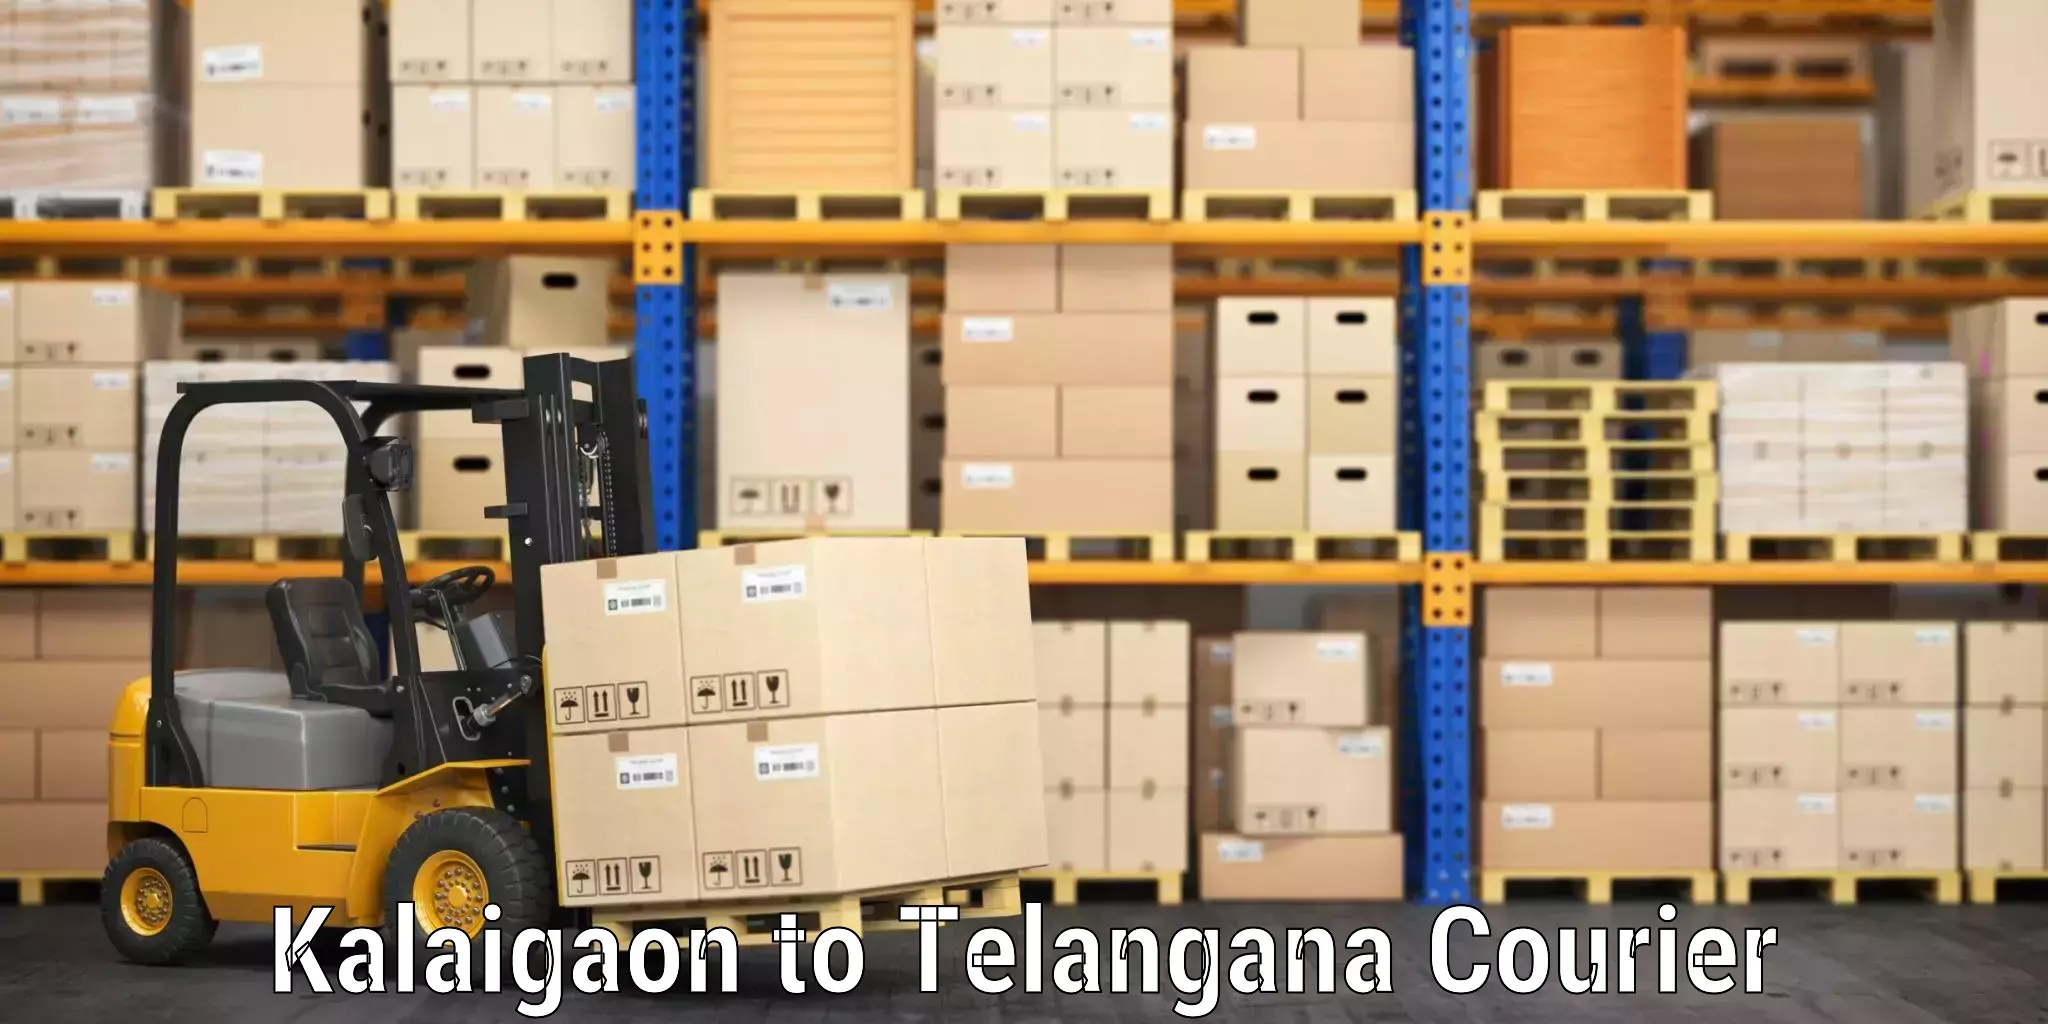 Luggage shipment specialists Kalaigaon to Bhupalpally